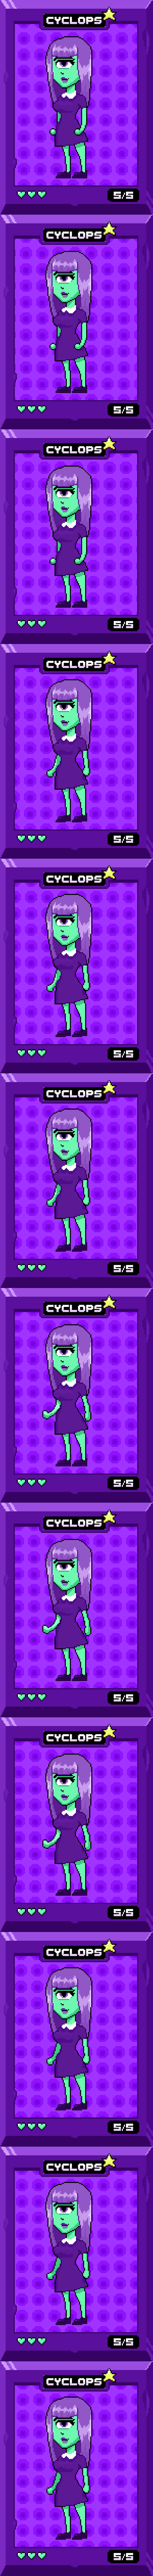 Monsty #4: Cynthia the Cyclops